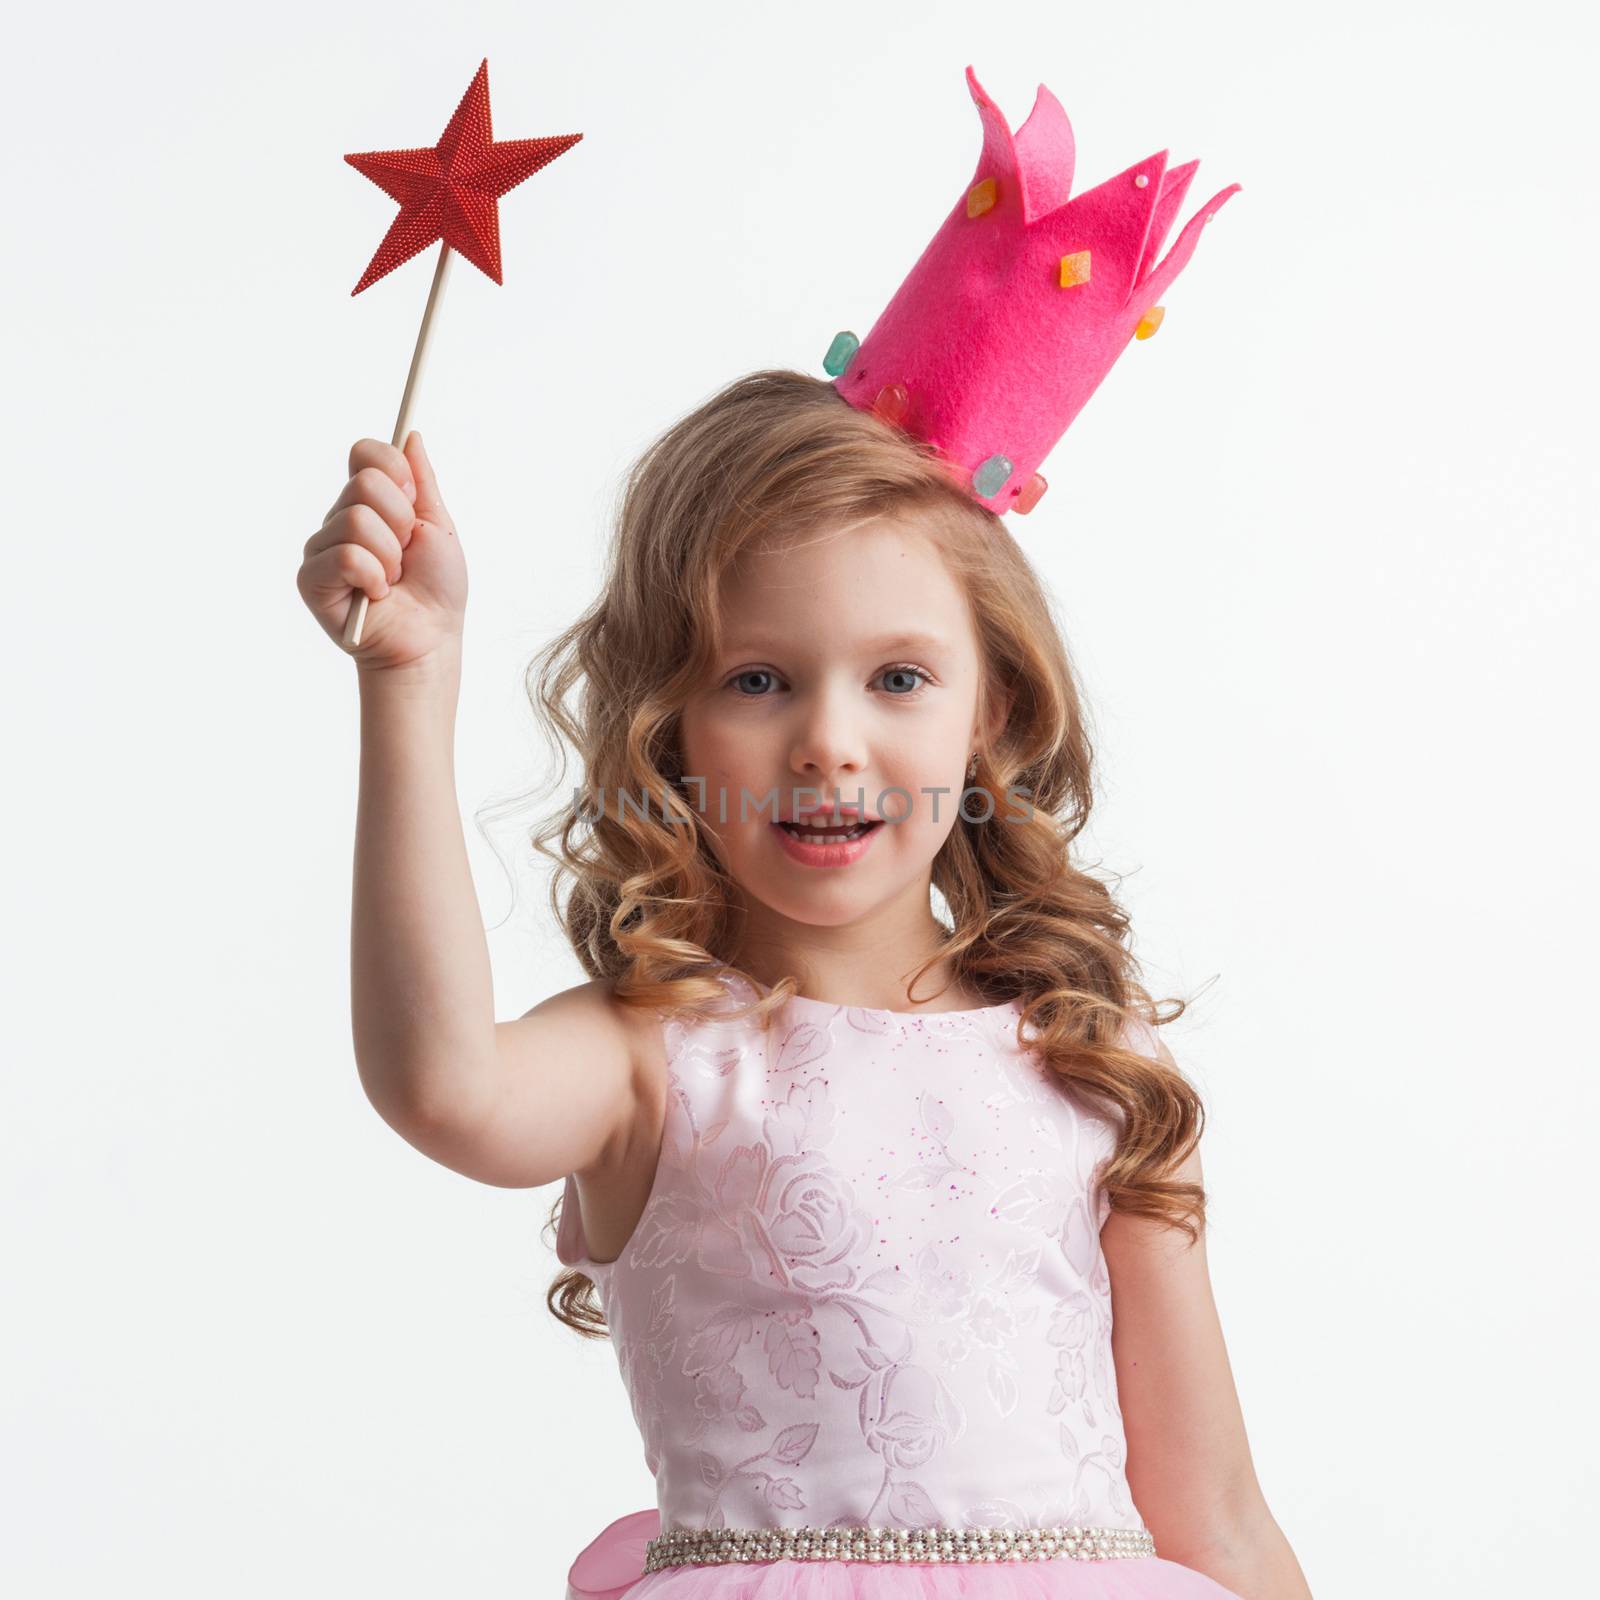 Princess girl with star magic wand by Yellowj